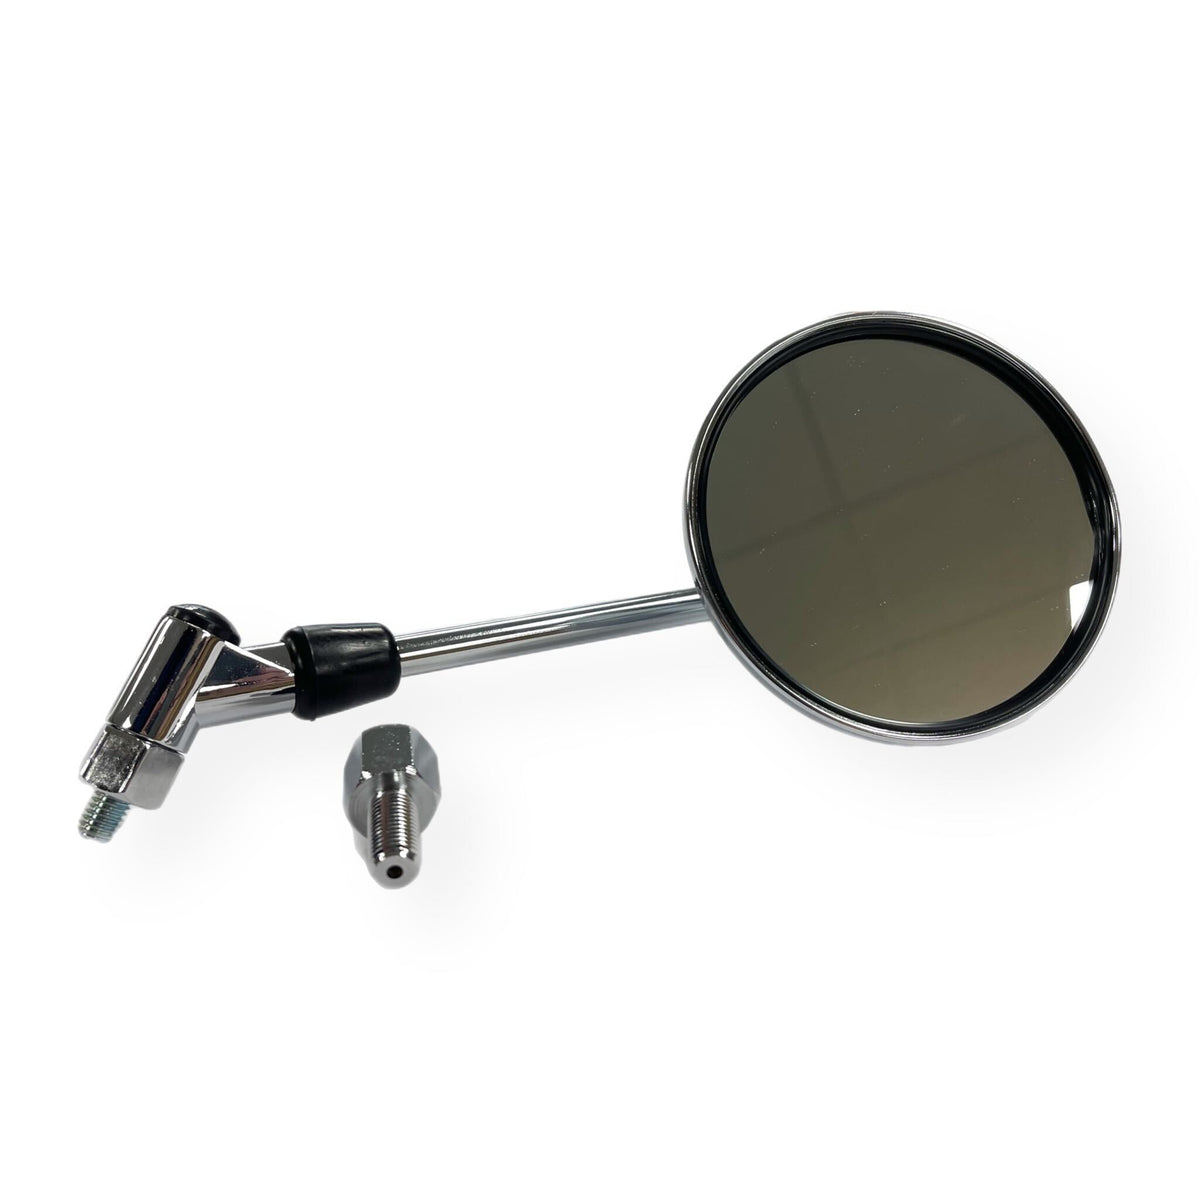 Vespa Lambretta Universal Singular Adjustable 8mm/10mm Round Mirror - Chrome